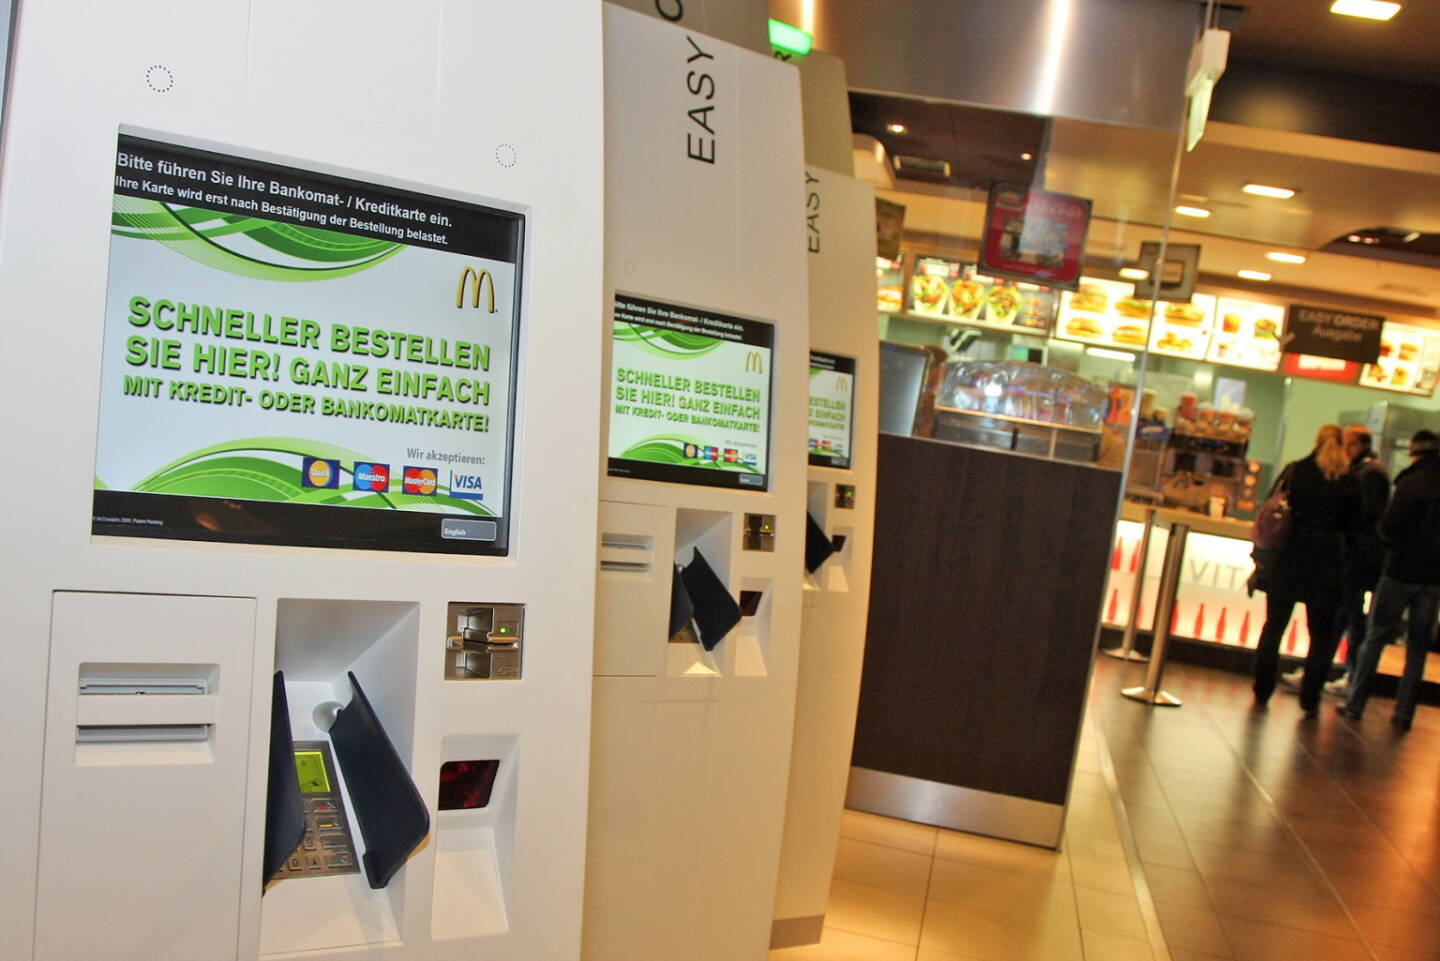 Self-Order-Kiosk bei McDonald's in der Mariahilfer Straße 85-87
(C) PayLife